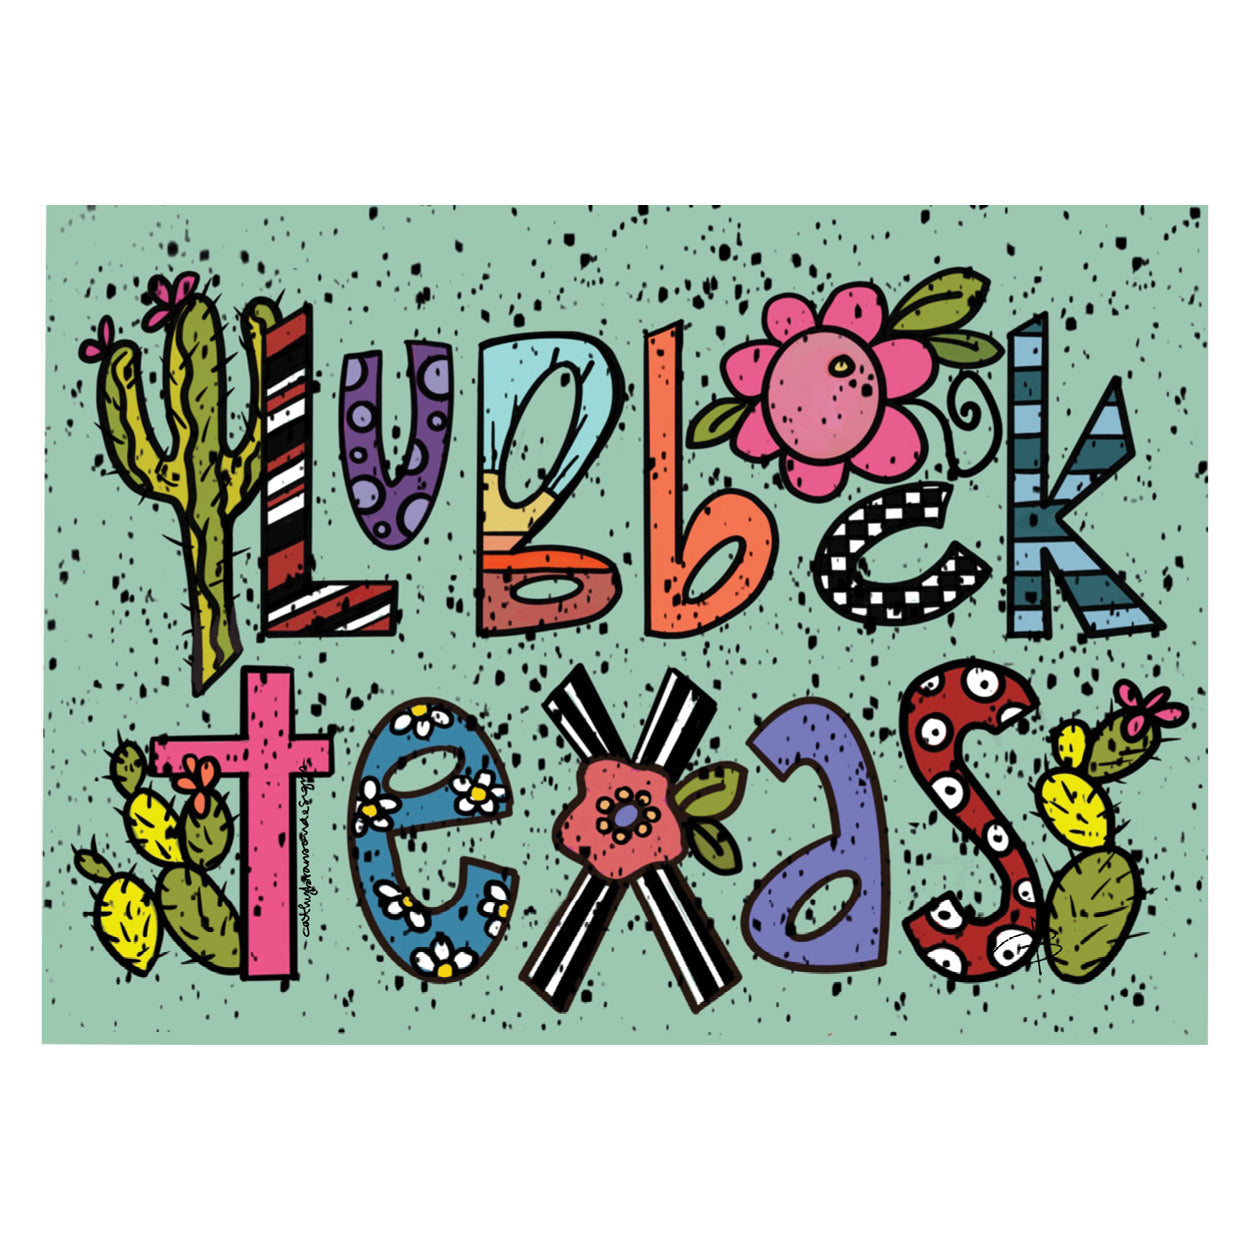 Lubbock TX cards